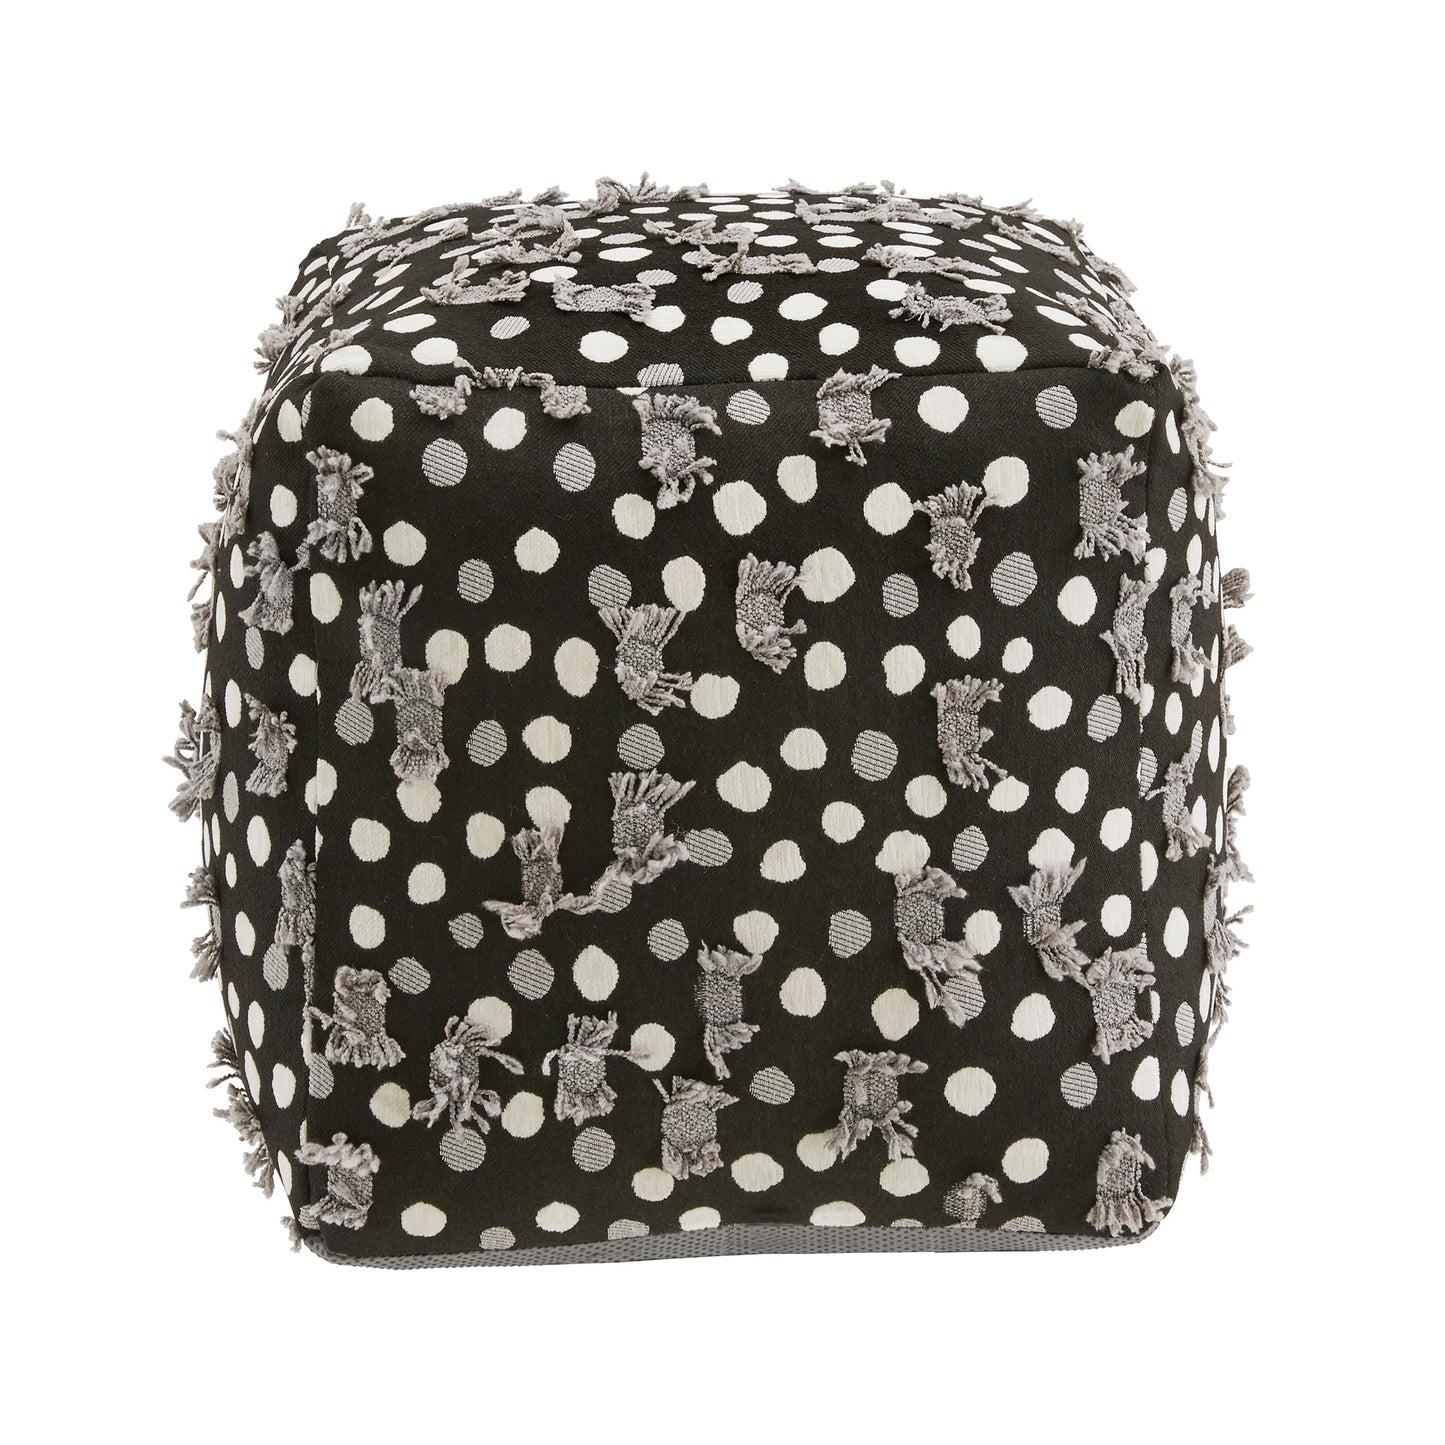 Upholstered Square Pouf Ottoman - Black White & Grey Poker Dot Pattern Fabric With Fringe